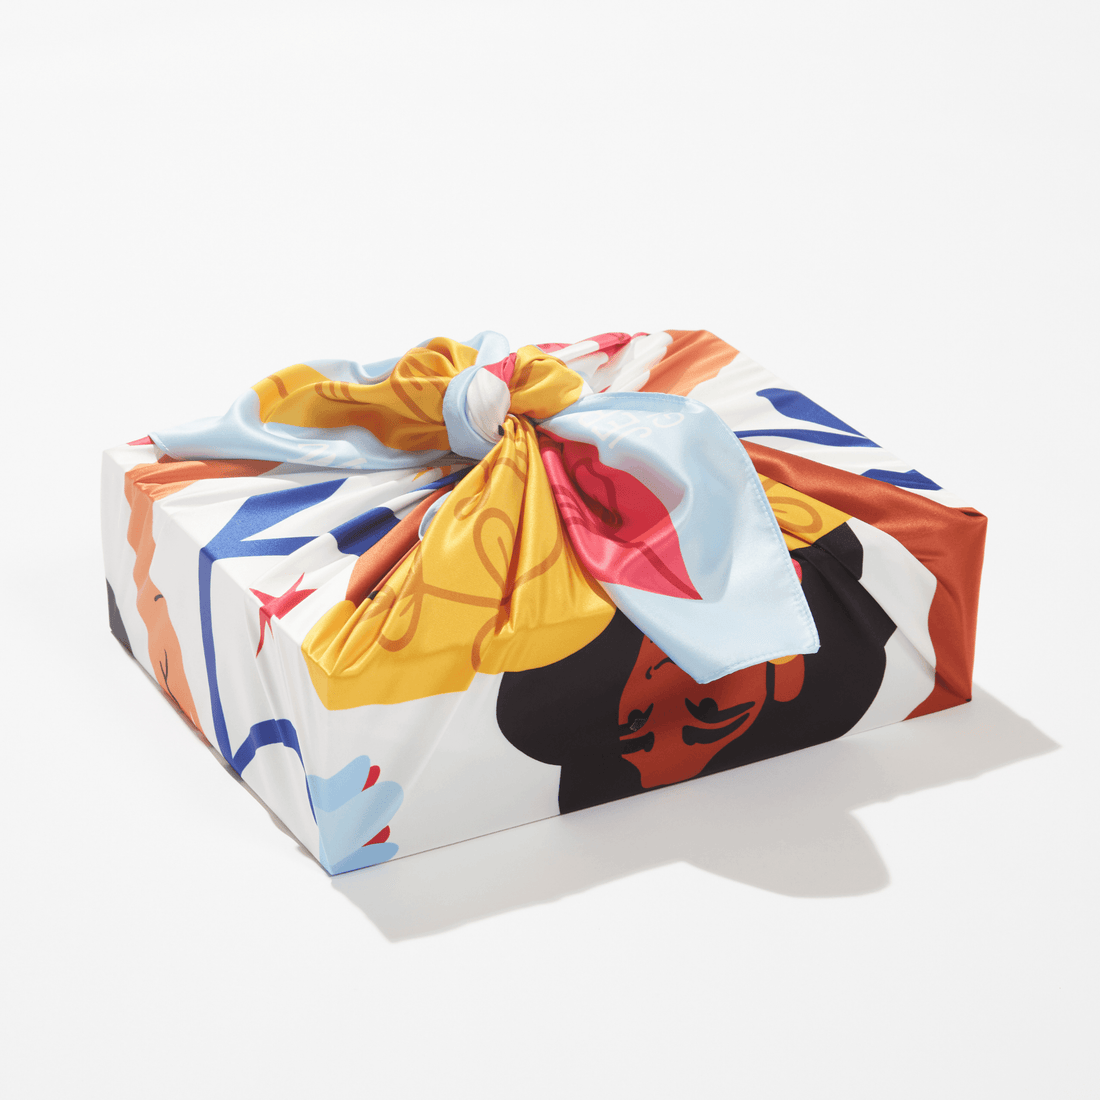 Refresh | 35" Furoshiki Gift Wrap by Jerilyn Guerrero - Wrappr